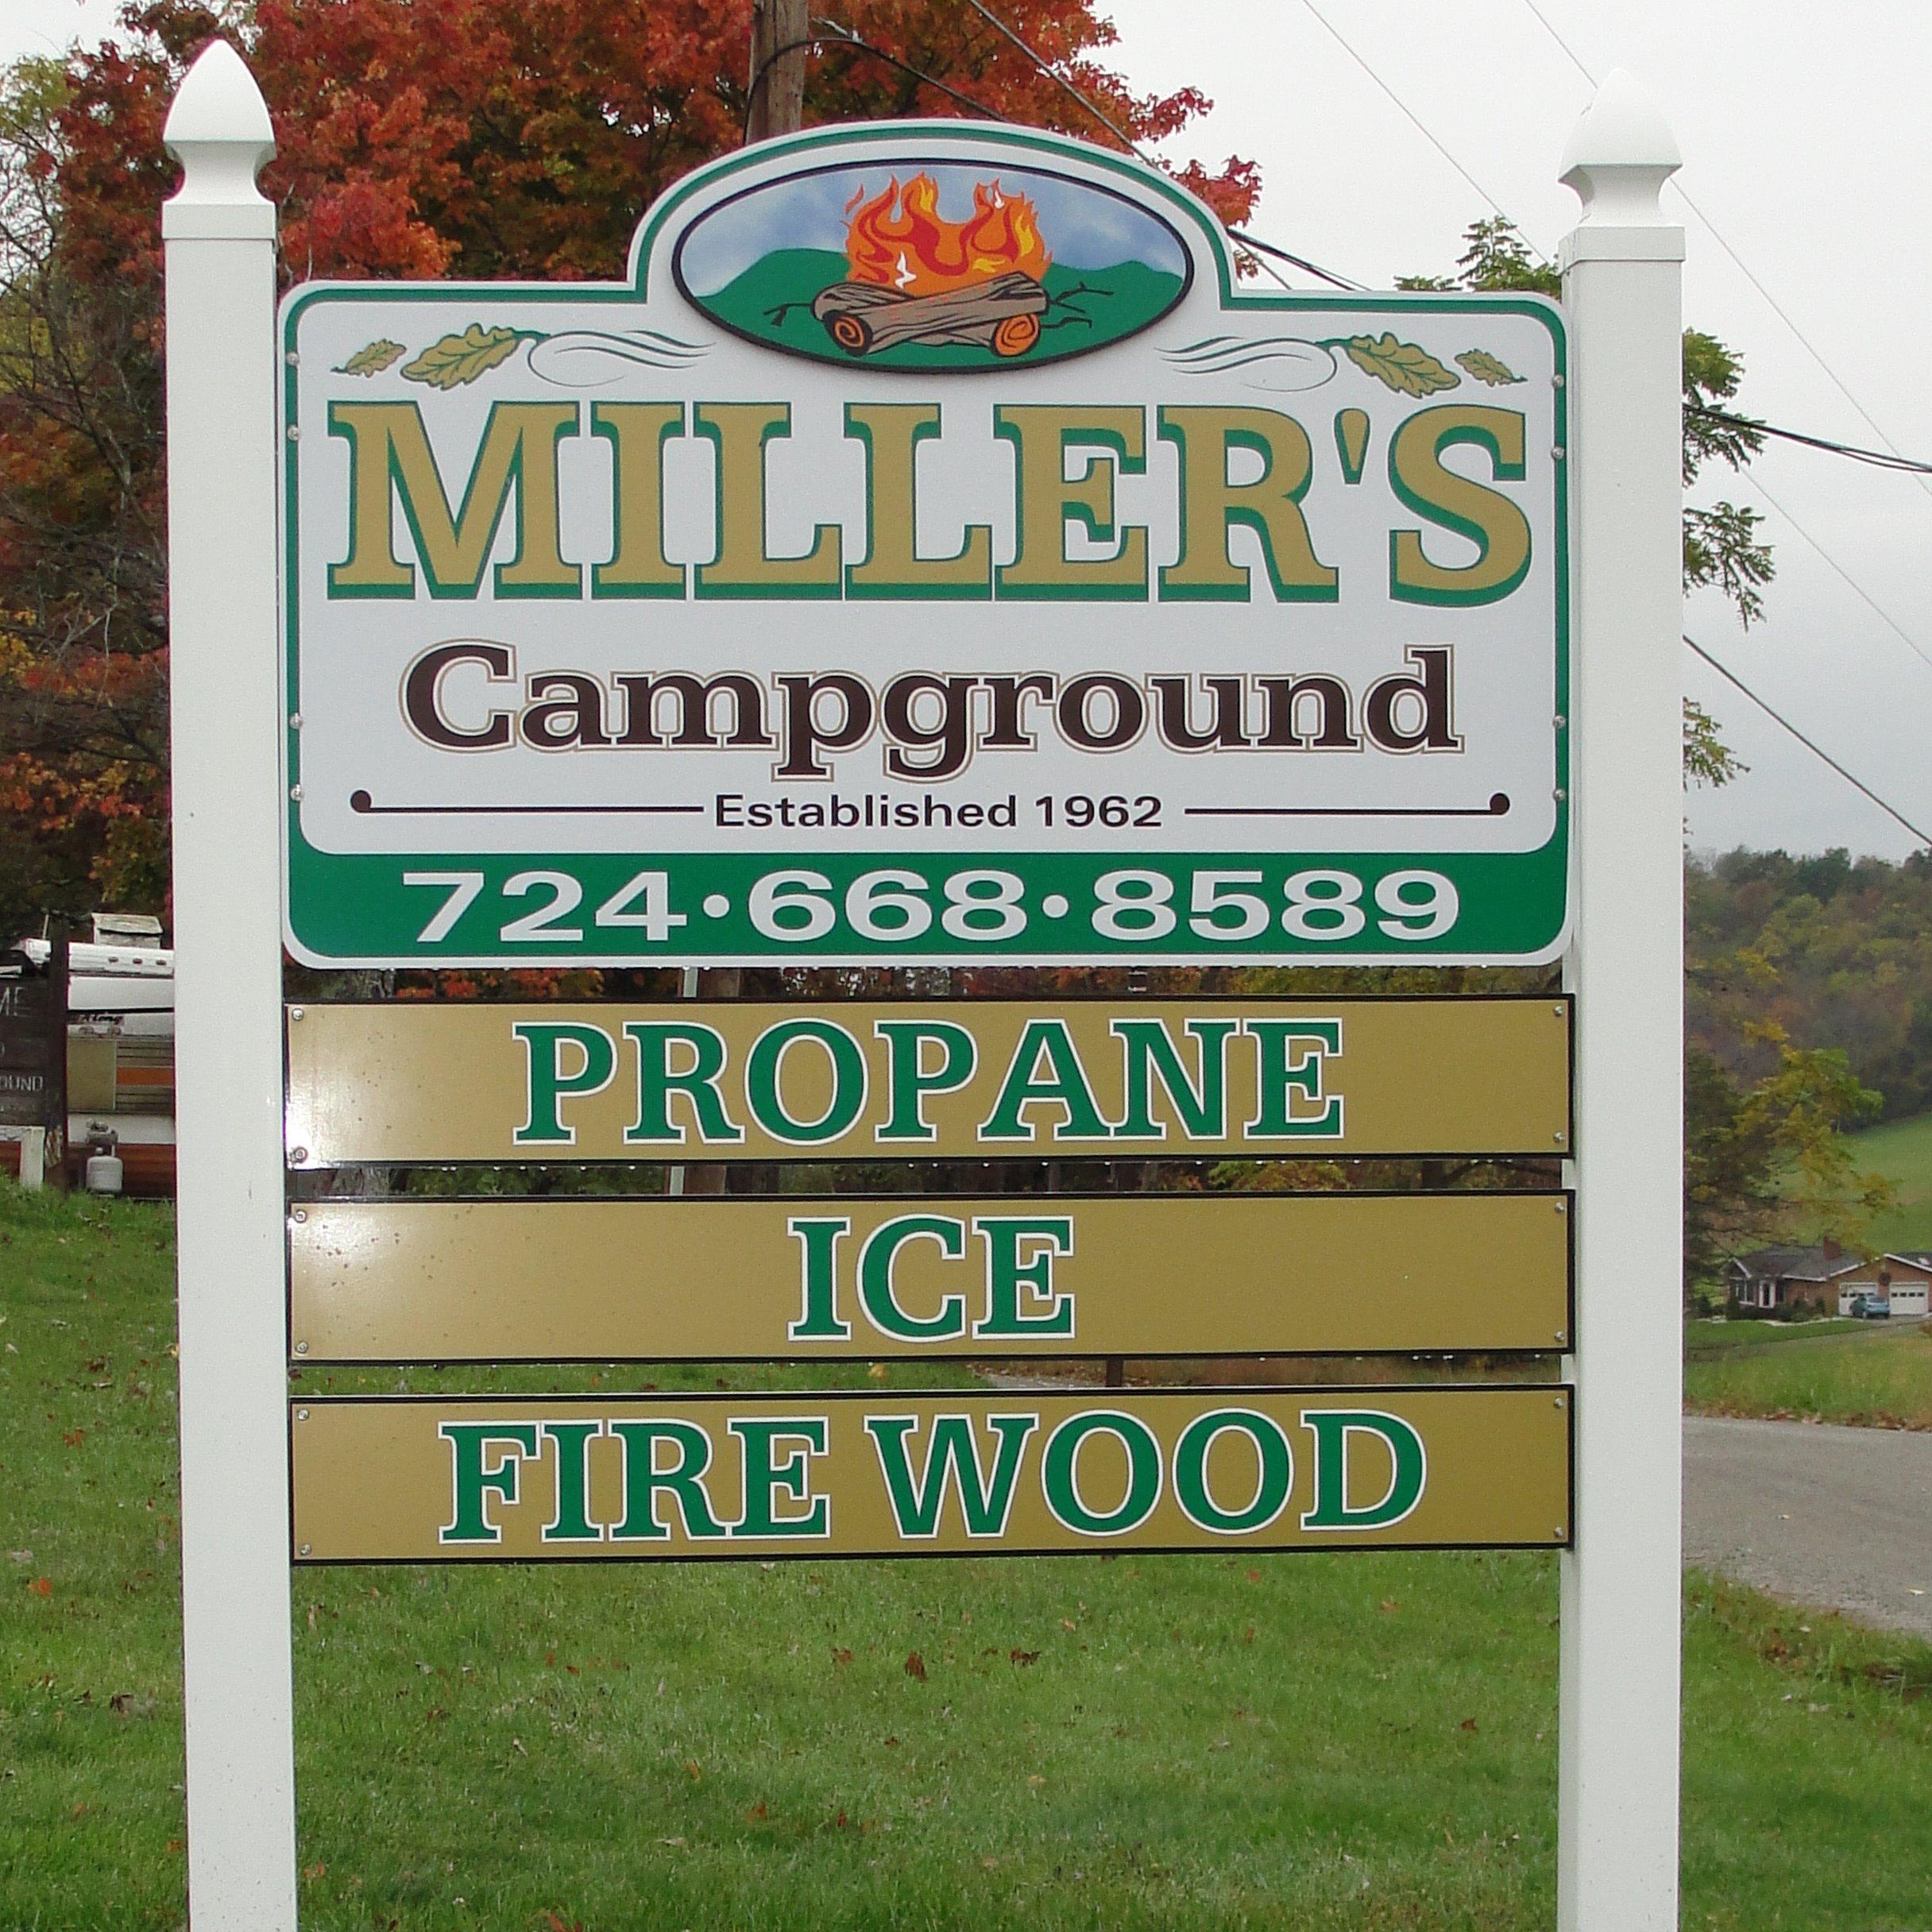 Miller's Campground